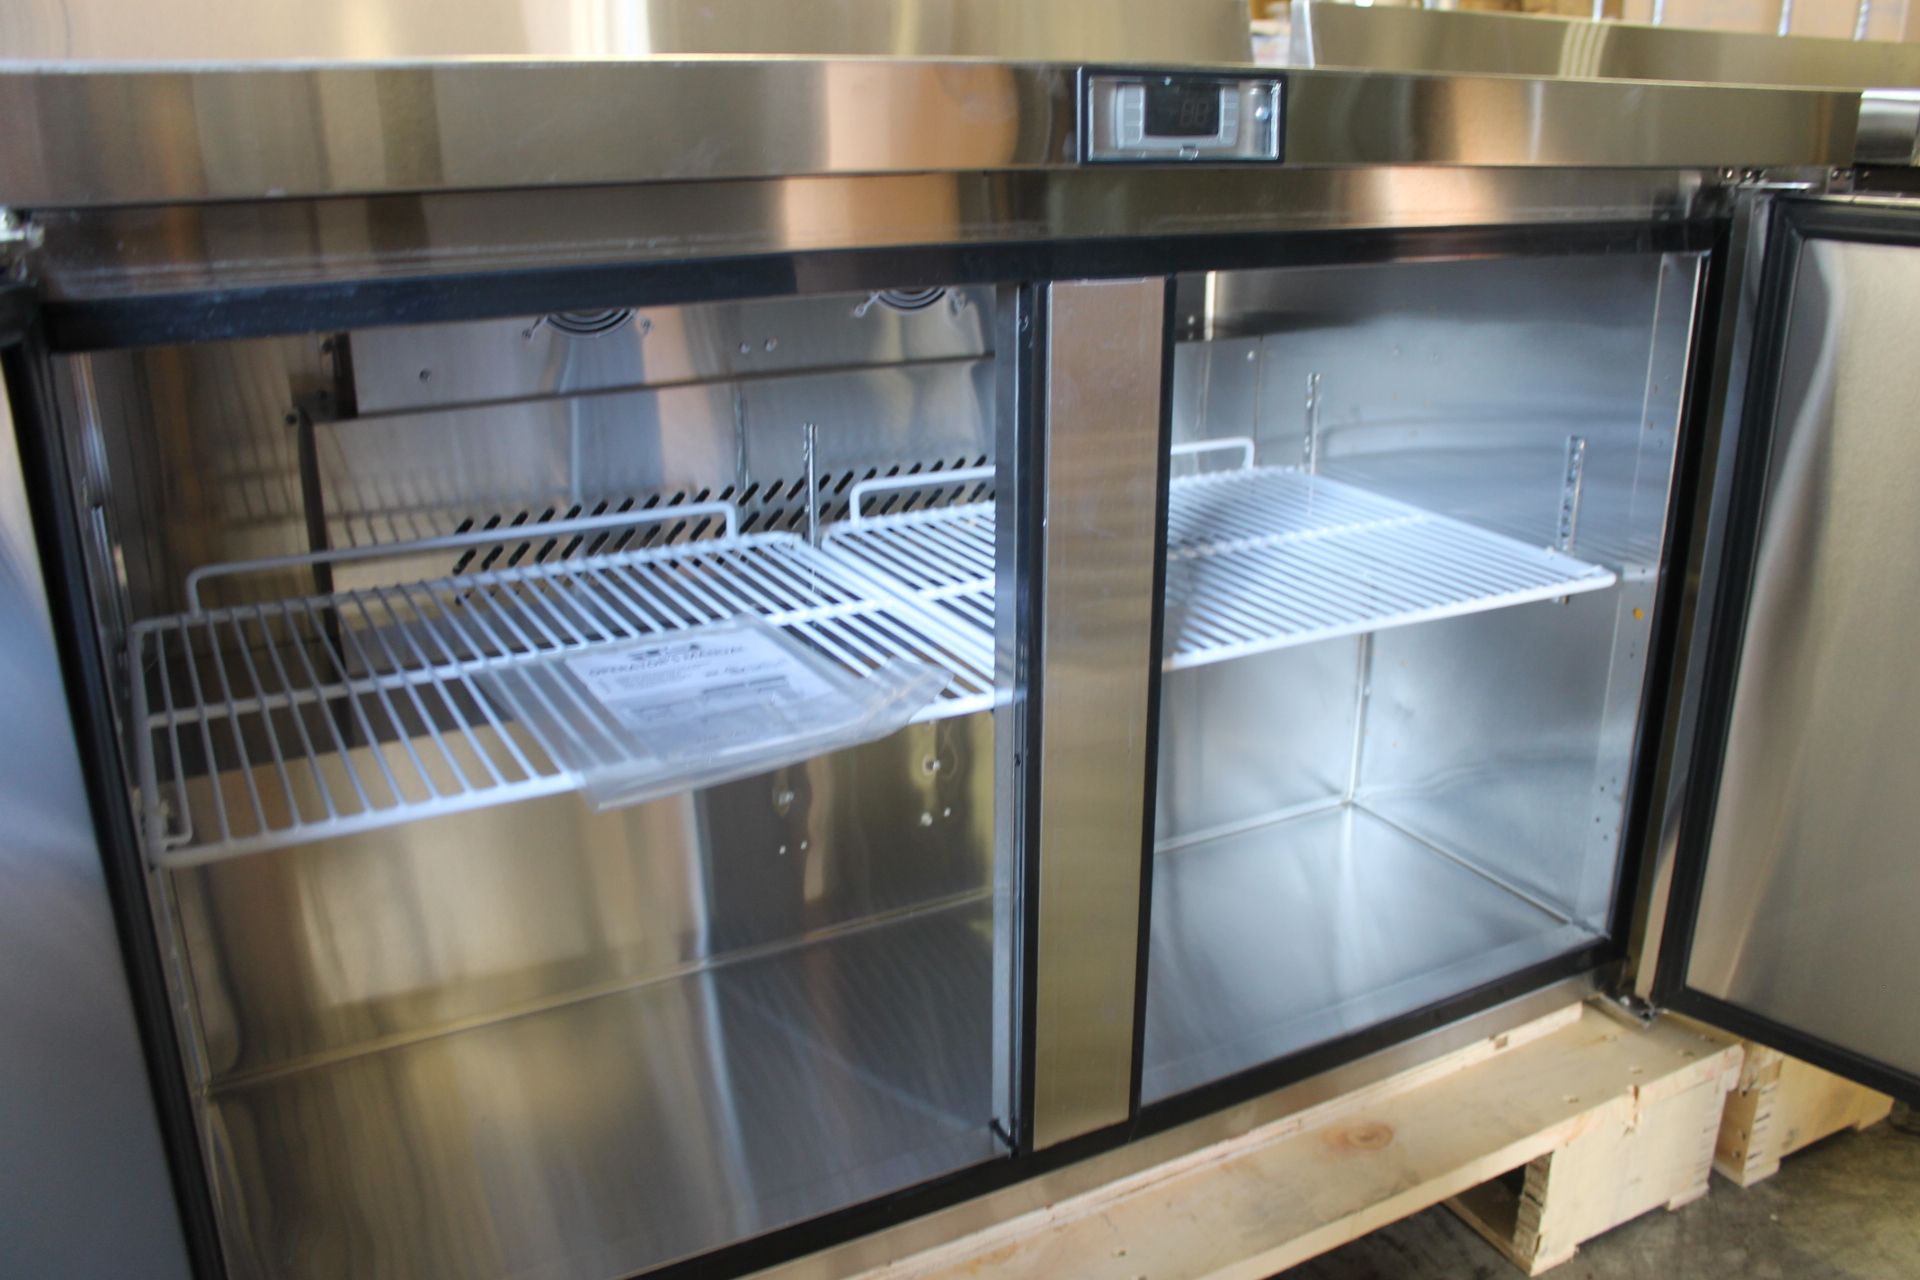 US Refrigeration 48" Work Top Freezer, 2-Door, 4" Back Splash - model USWT-48F - Image 6 of 6